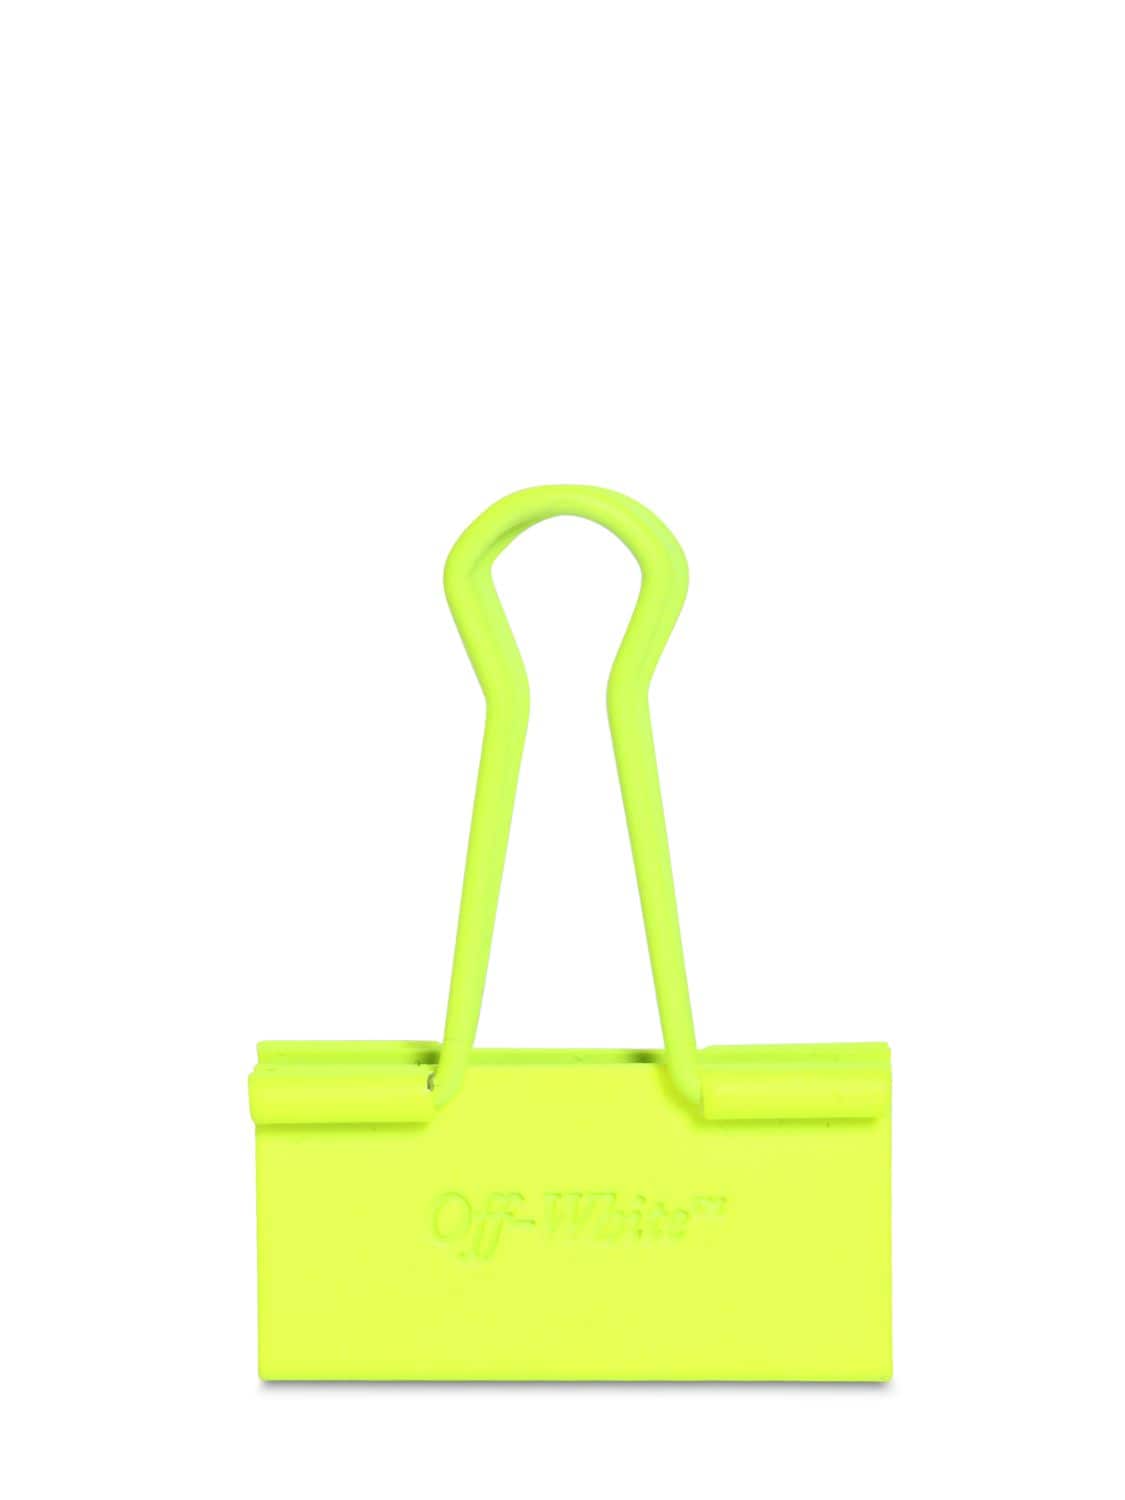 Off-white Neon Binder Clip In Neon Yellow